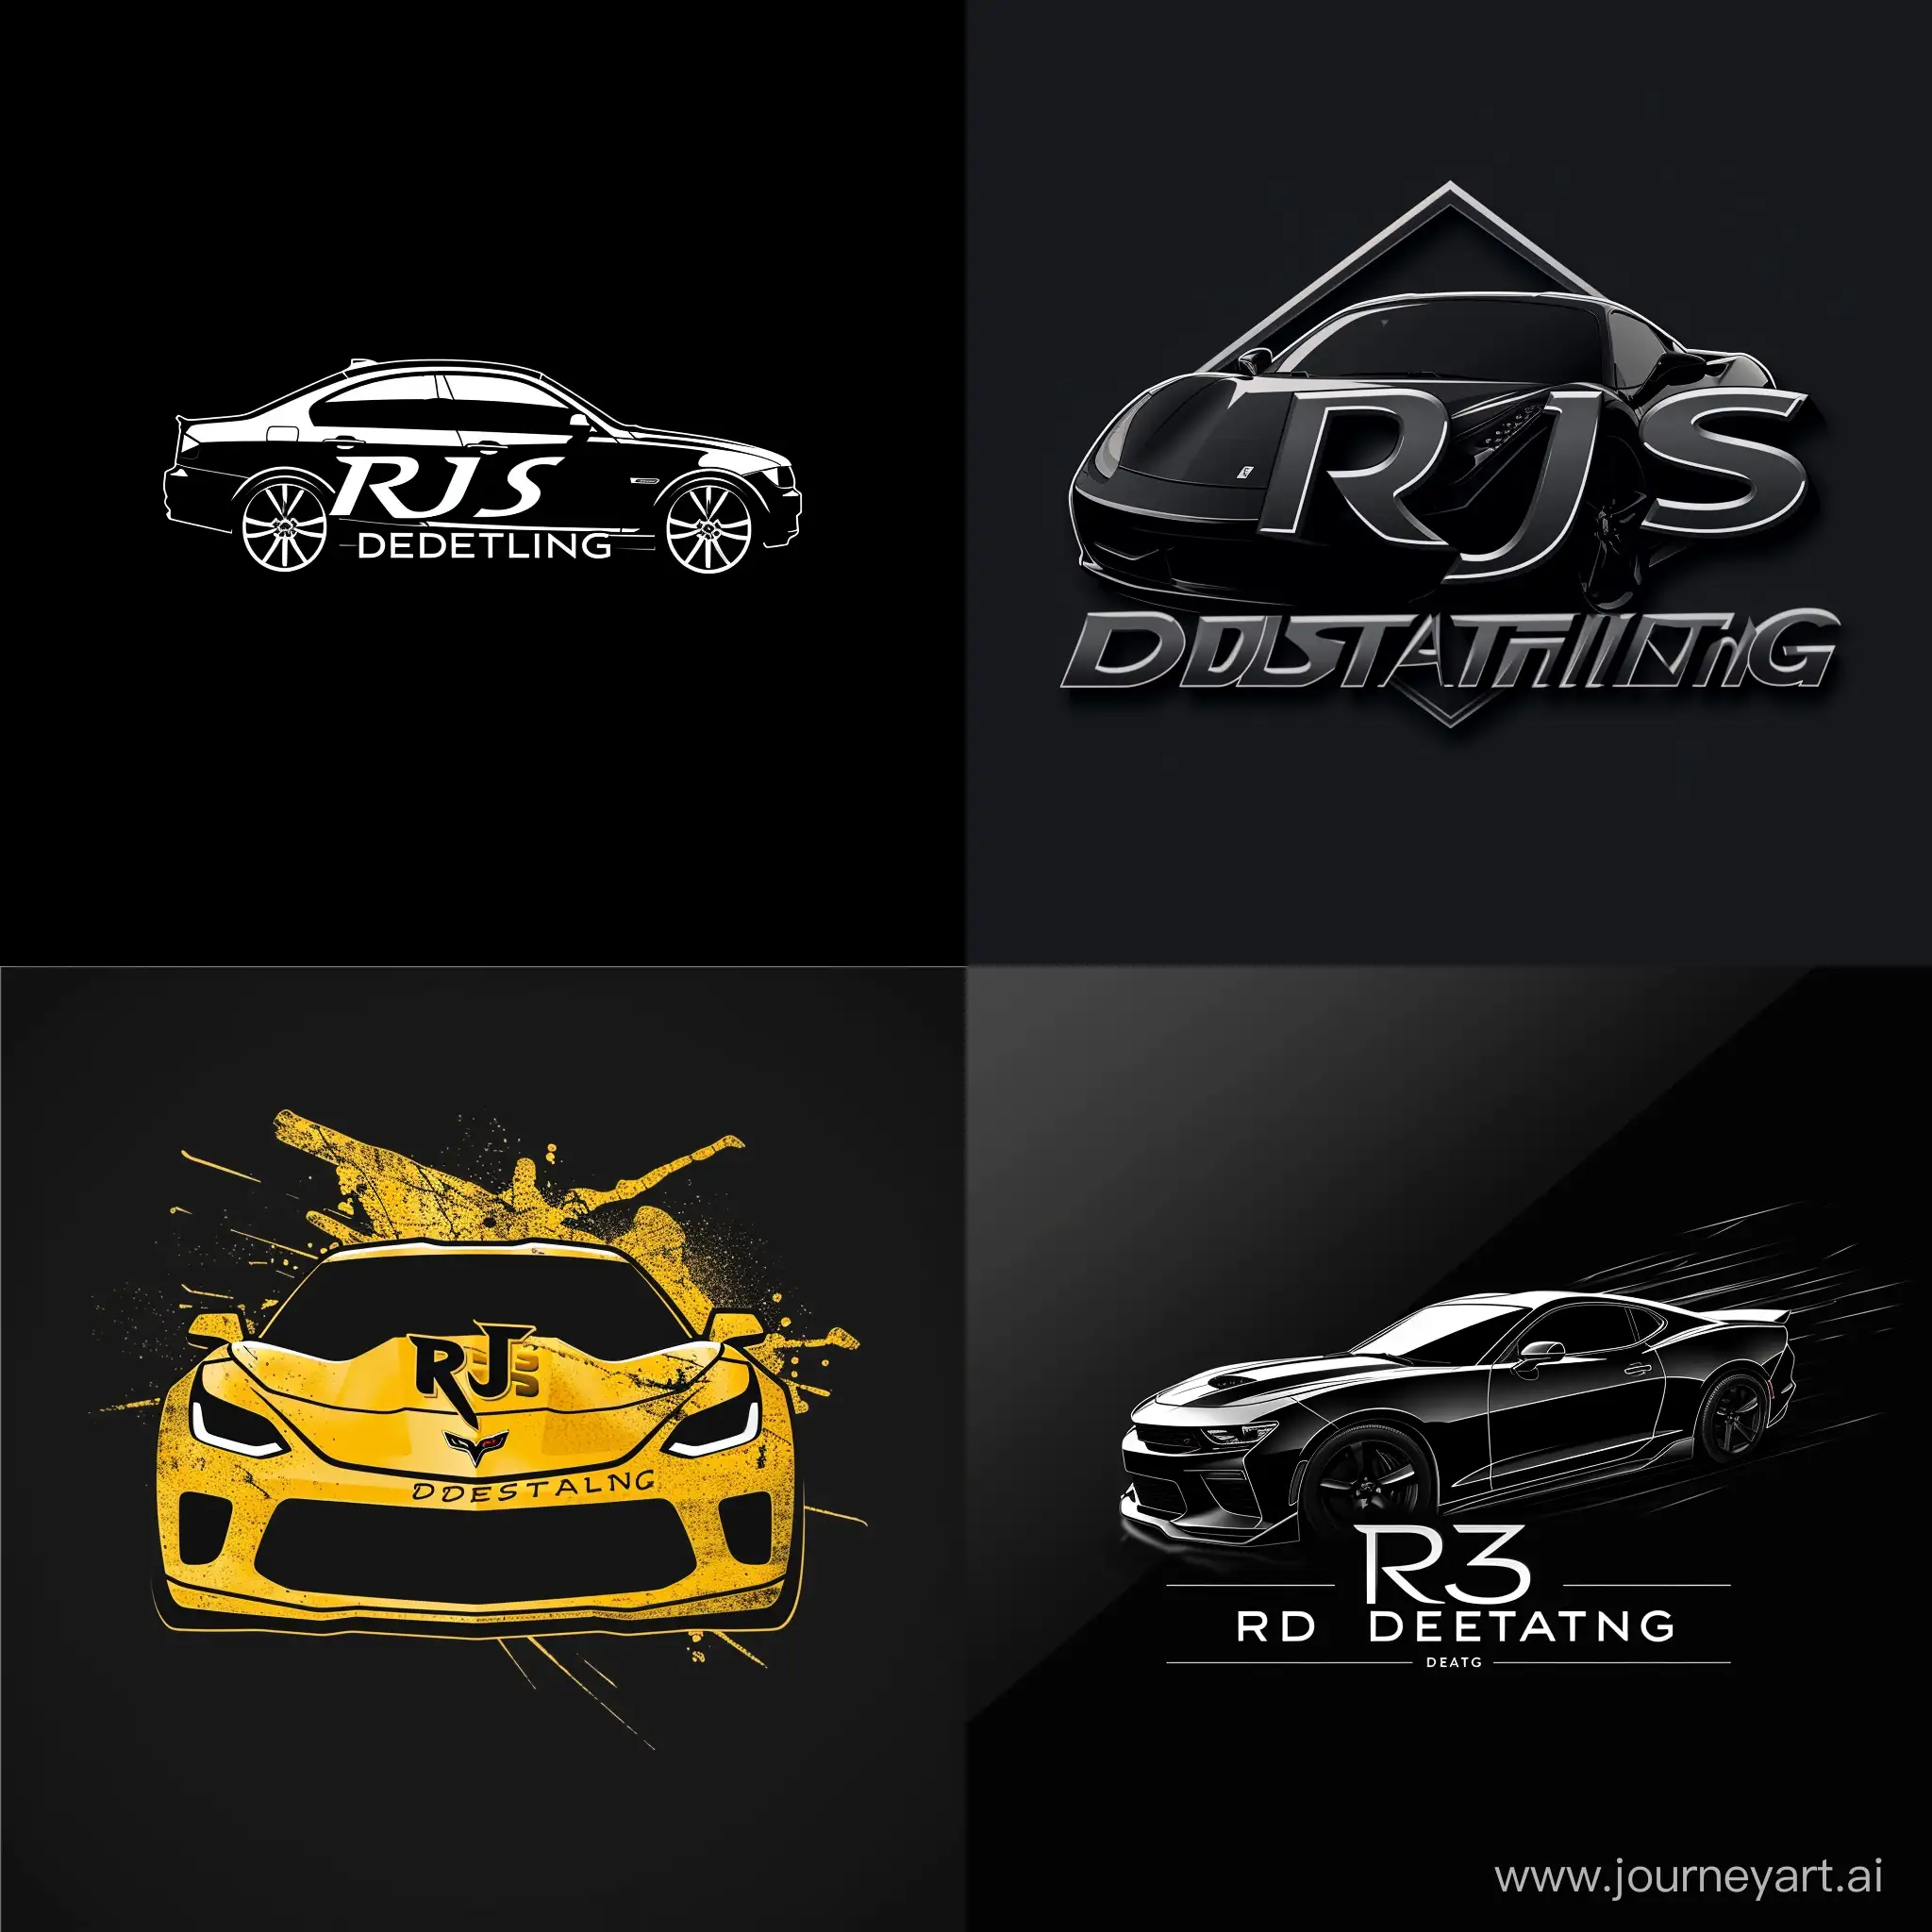 Create a car detailing logo logo name "RJS DETAILING"